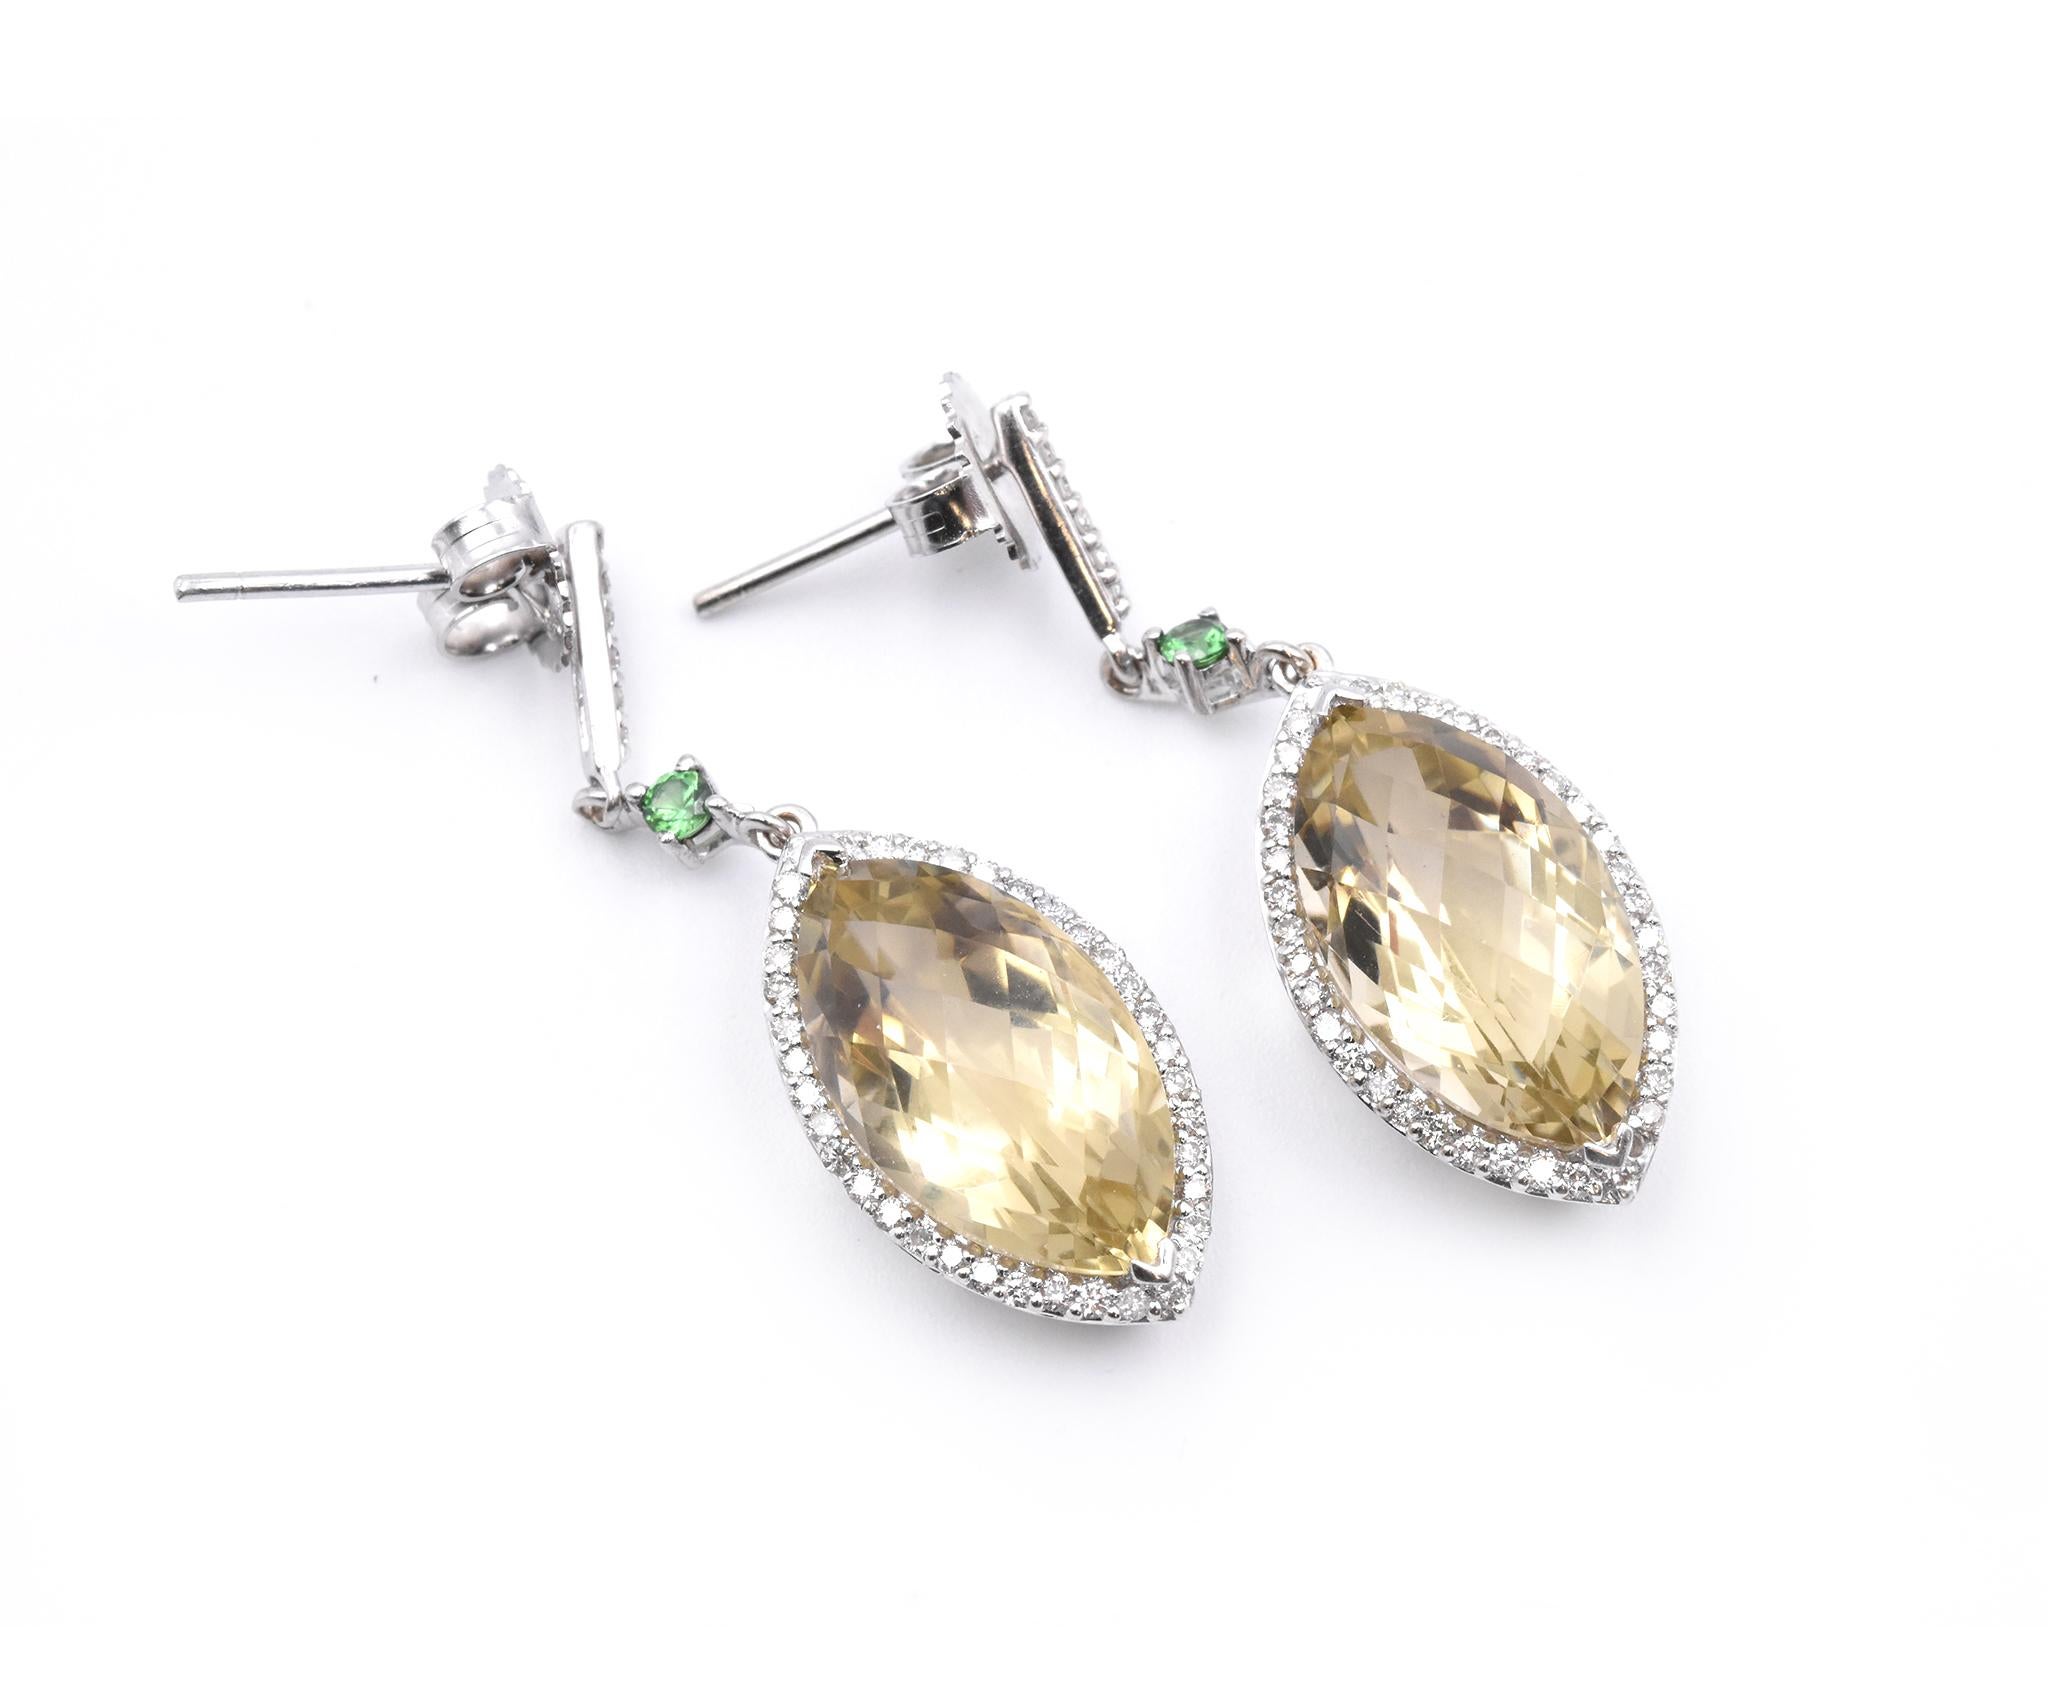 Designer: Raico
Material: 18k white gold
Diamonds: 92 round brilliant cut = .50cttw
Color: G 
Clarity: VS2
Dimensions: earrings measure 36.75mm X 11.30mm
Weight: 6.37 grams